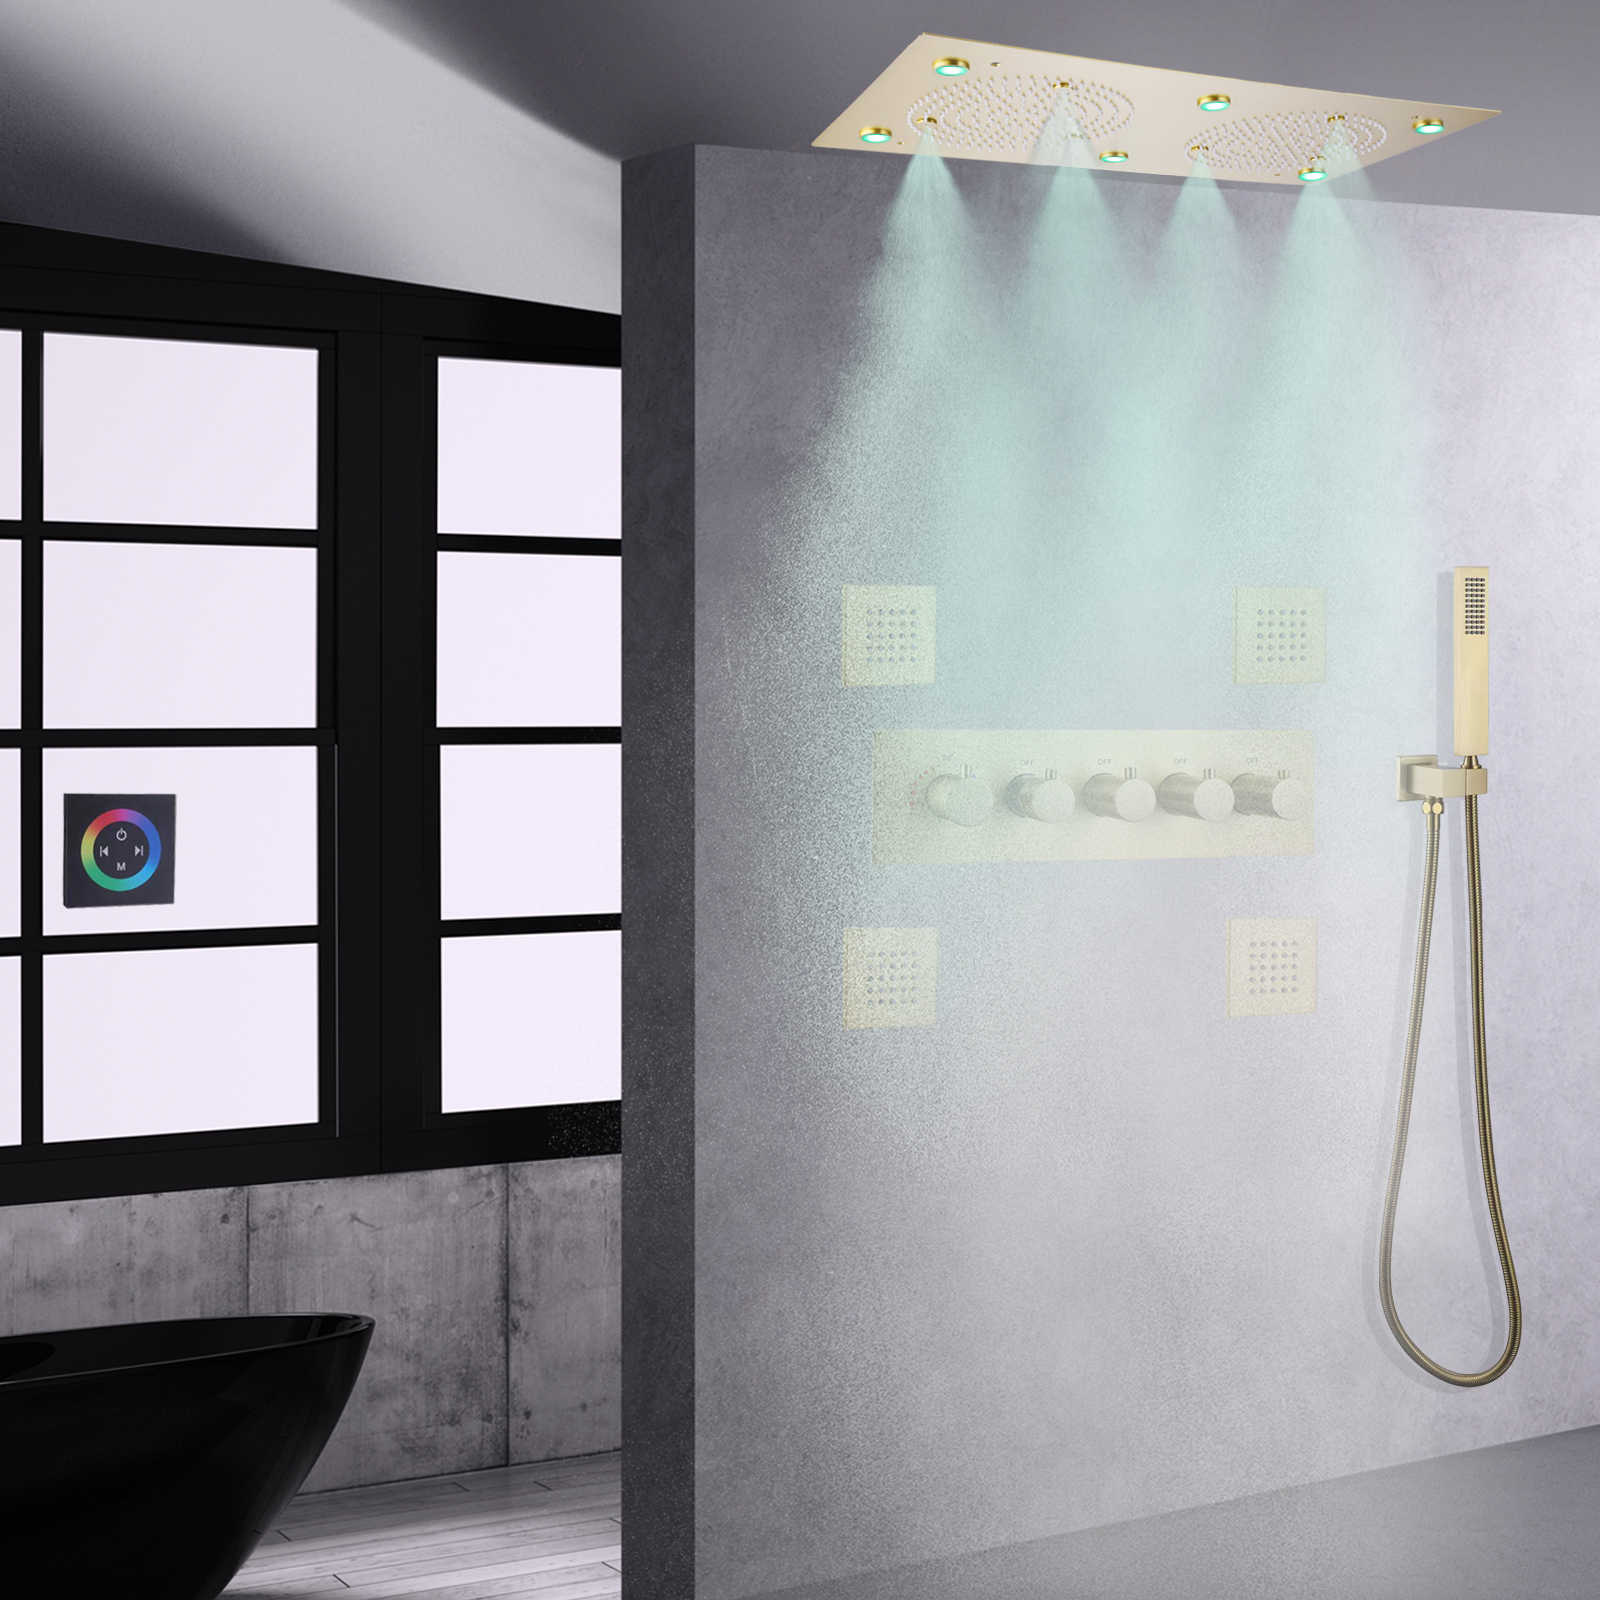 Brushed Gold LED Shower System Set Bathroom ThermostaticMist Rainfall Shower Massage Head